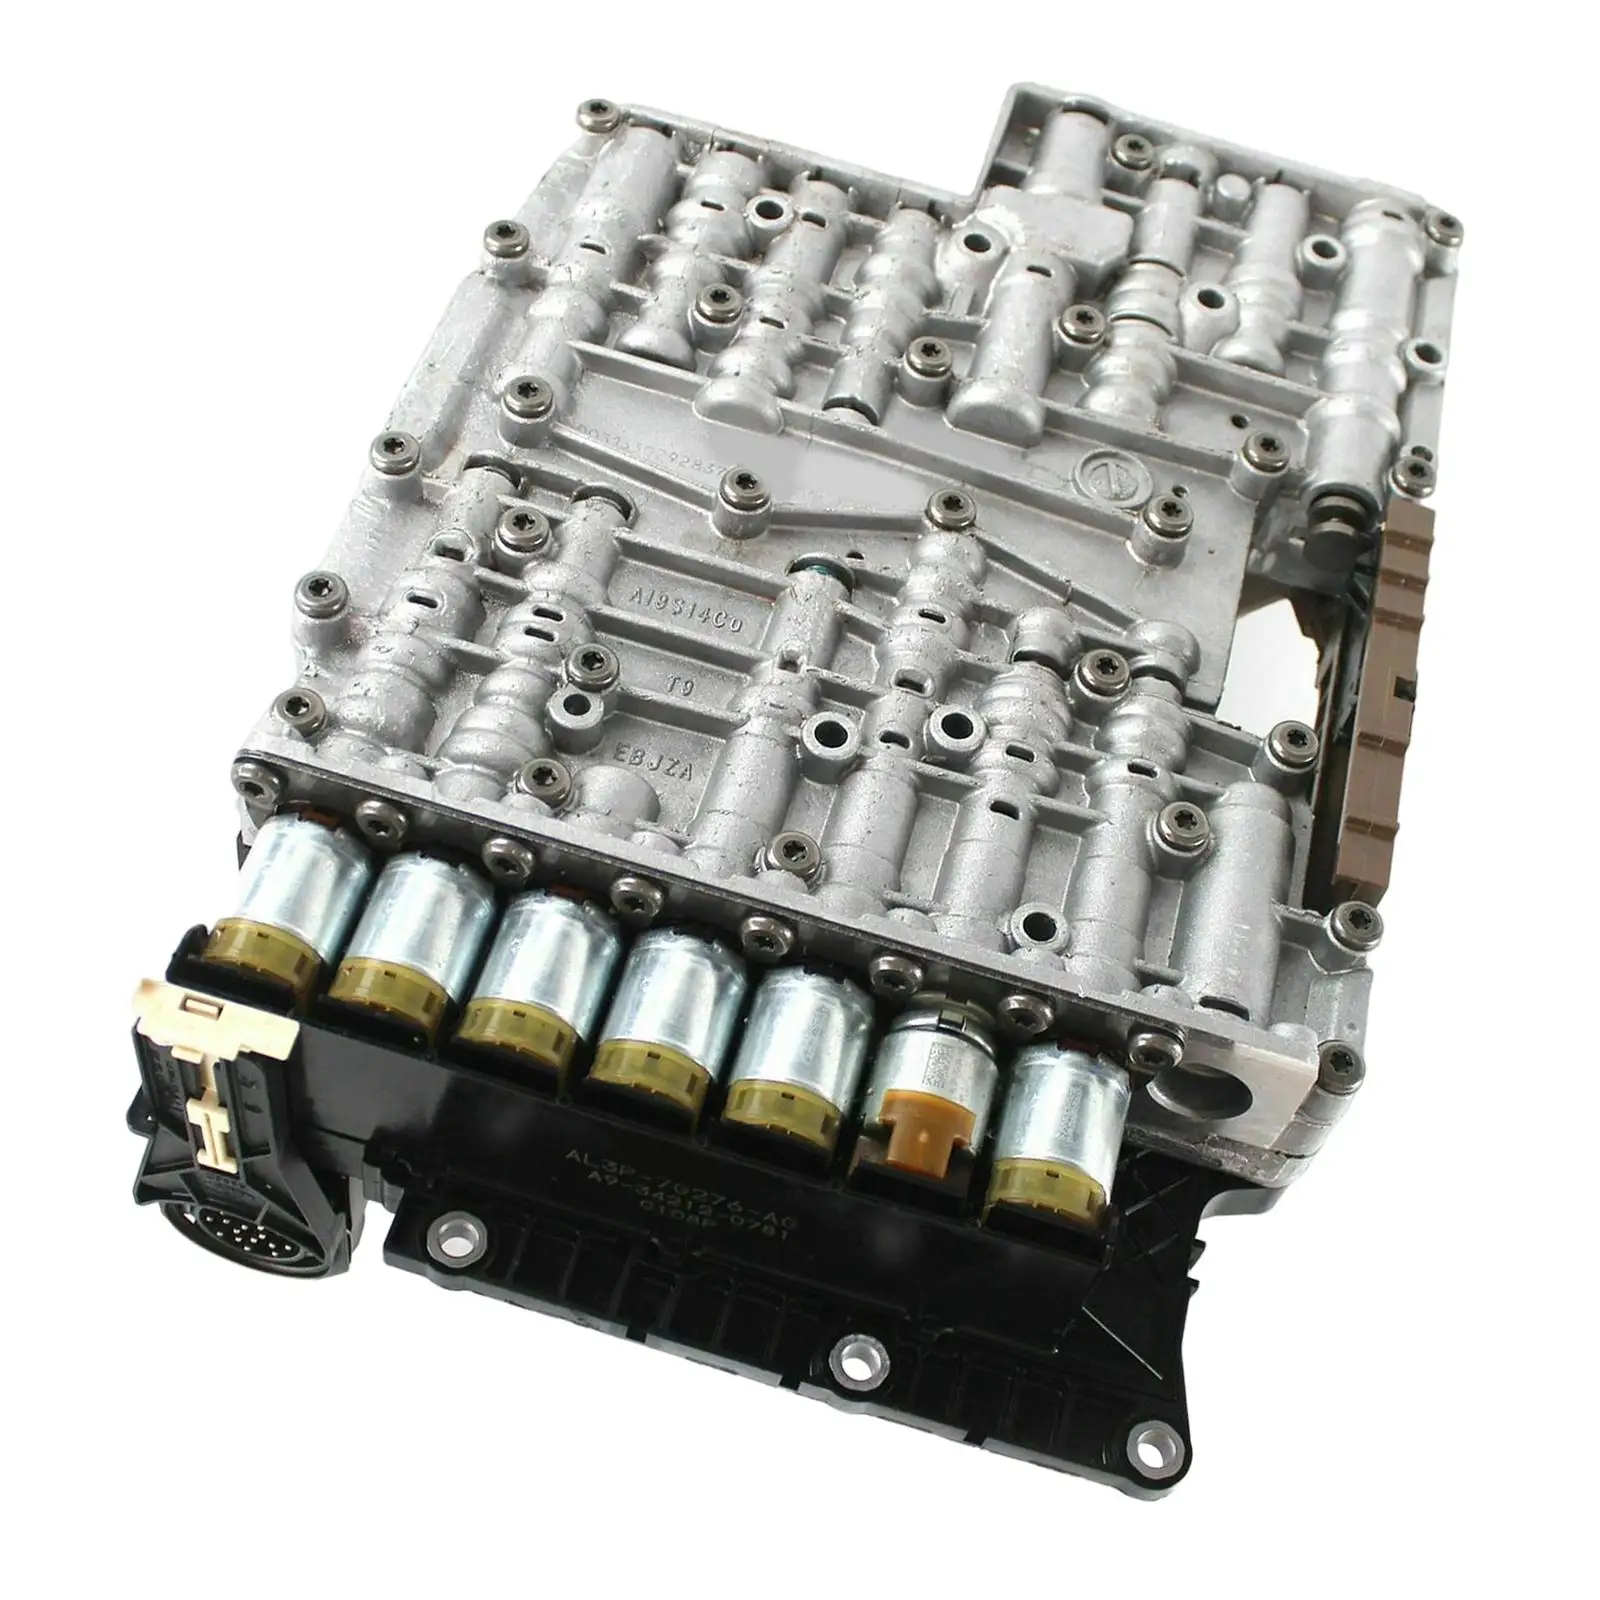 6R80 Transmission Valve Body AL3P-7Z490 for Ford   4WD